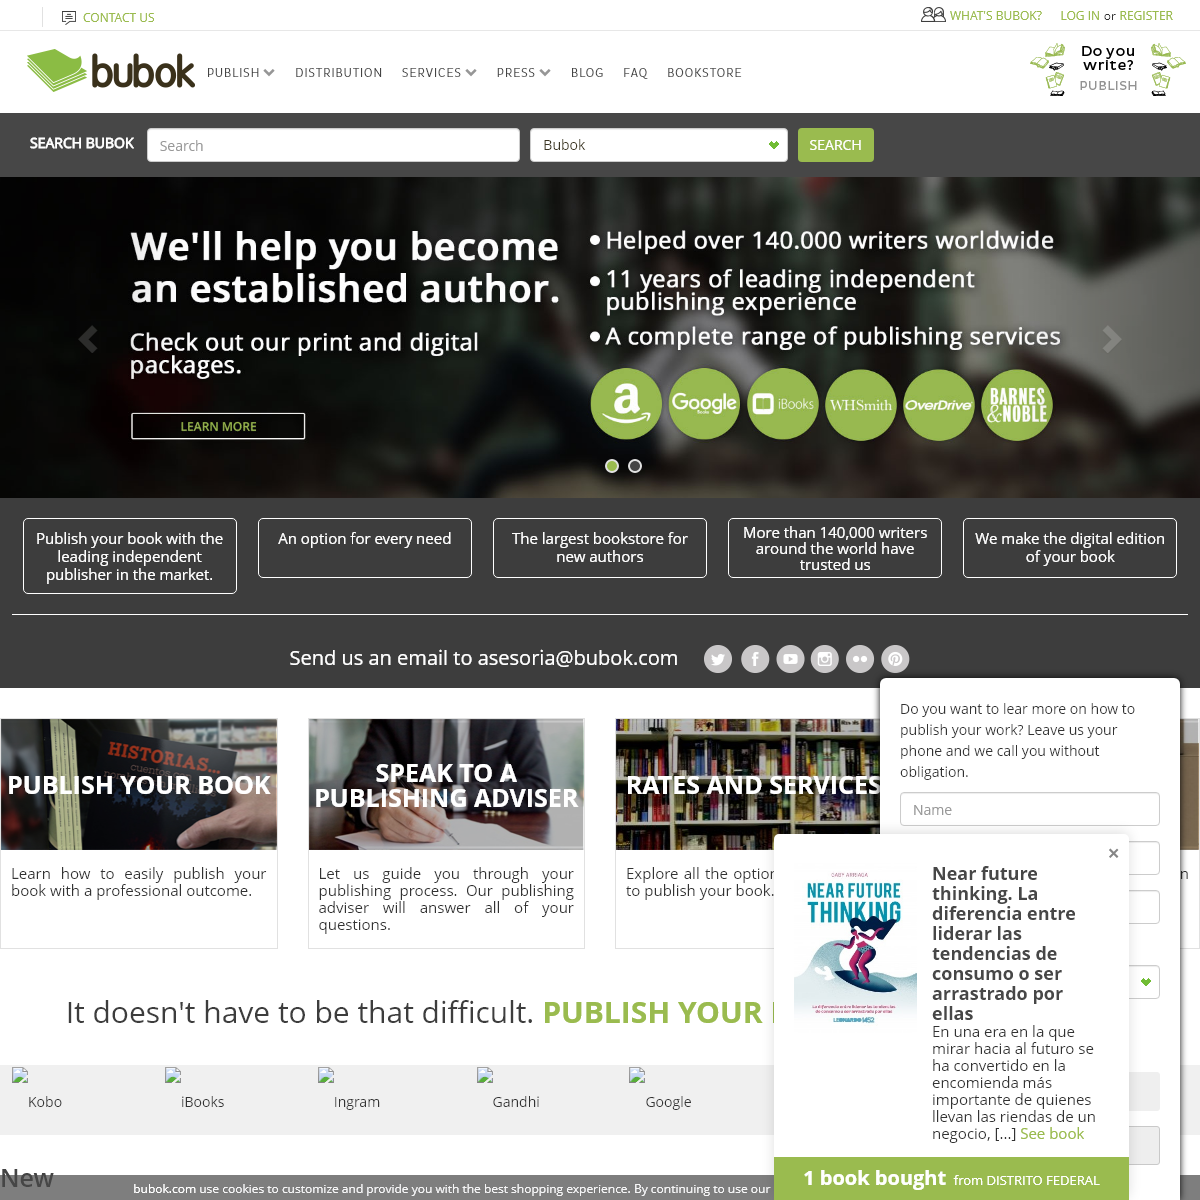 A complete backup of bubok.com